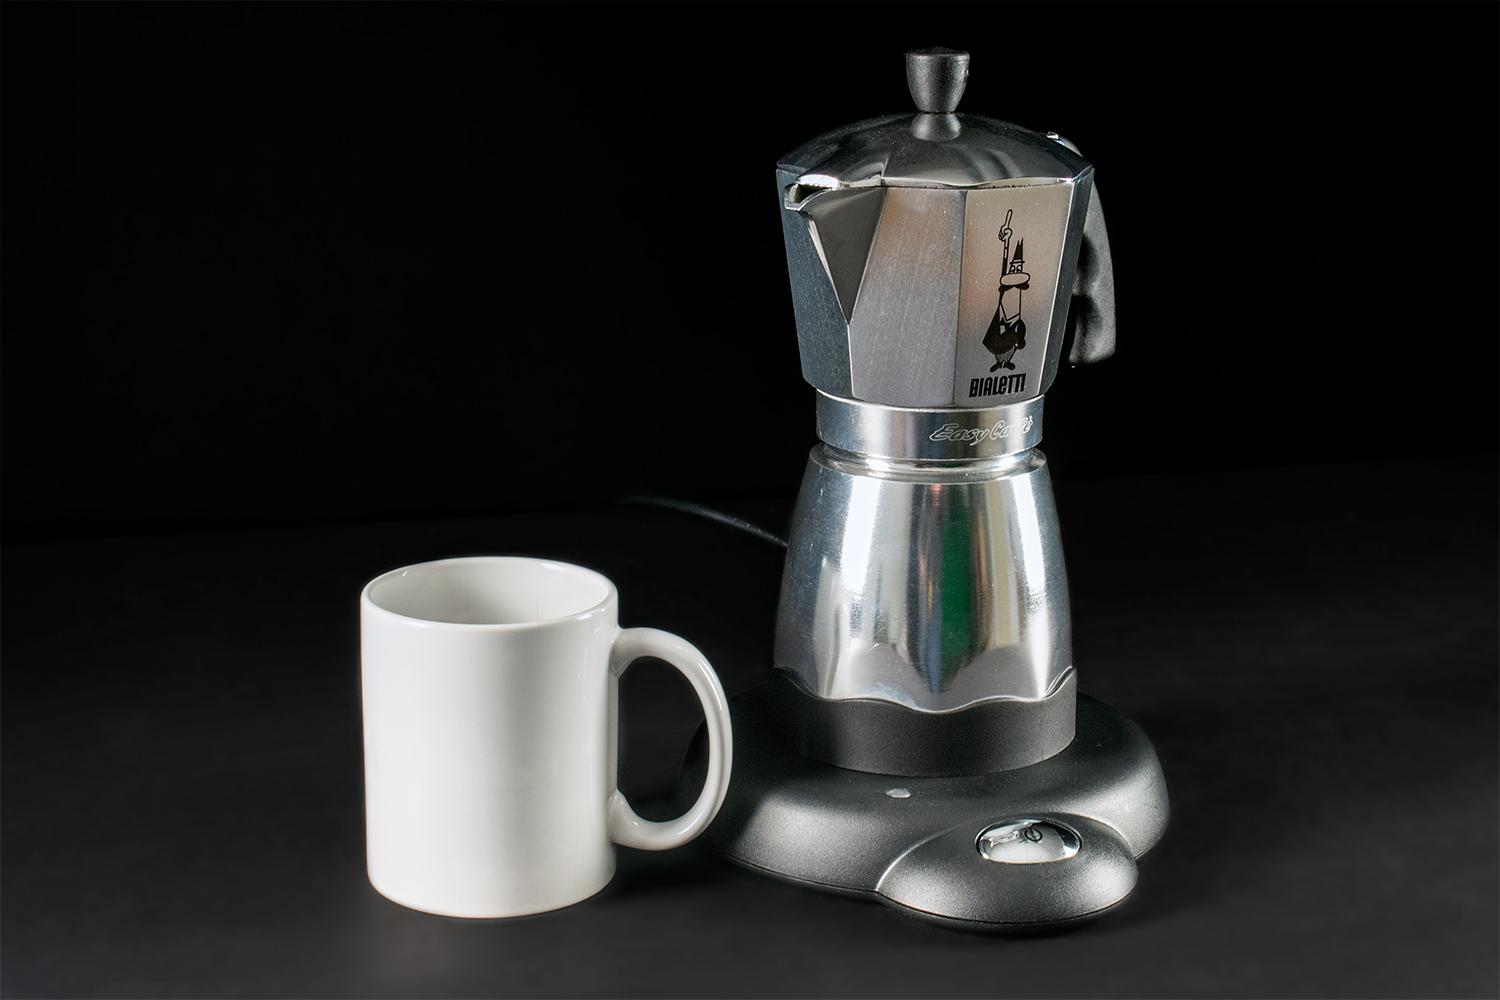 Bialetti Moka Elettrika 2 Cups Coffee Maker Electric Coffee